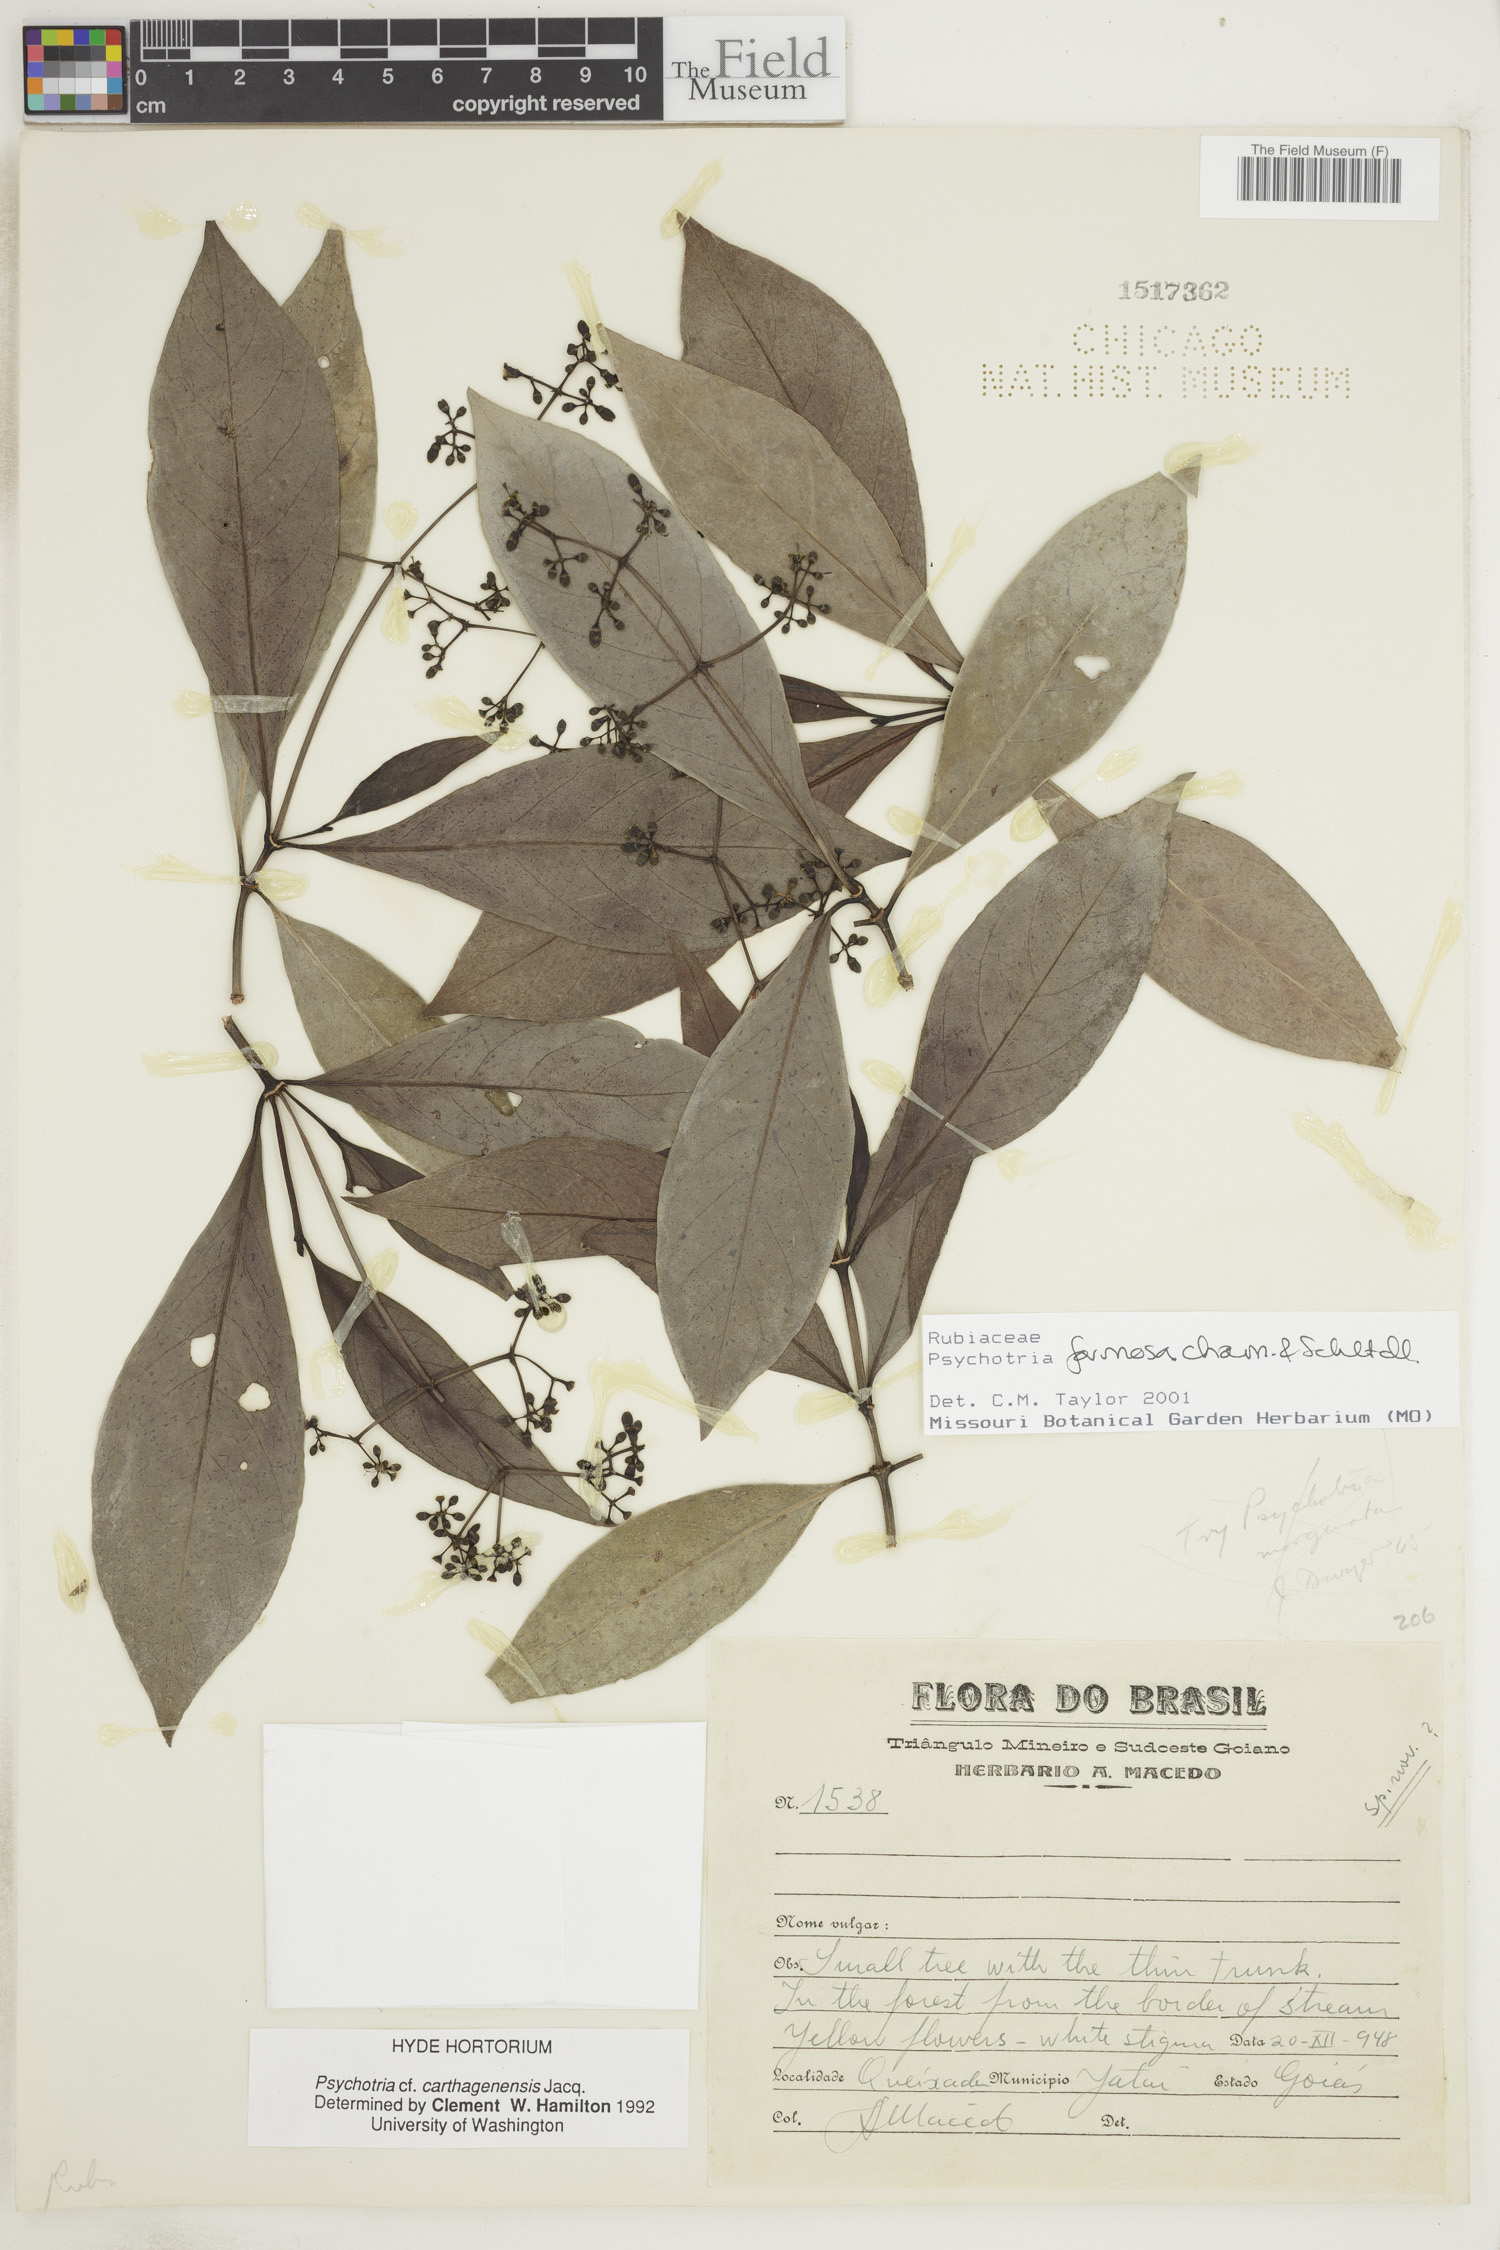 Psychotria formosa  image